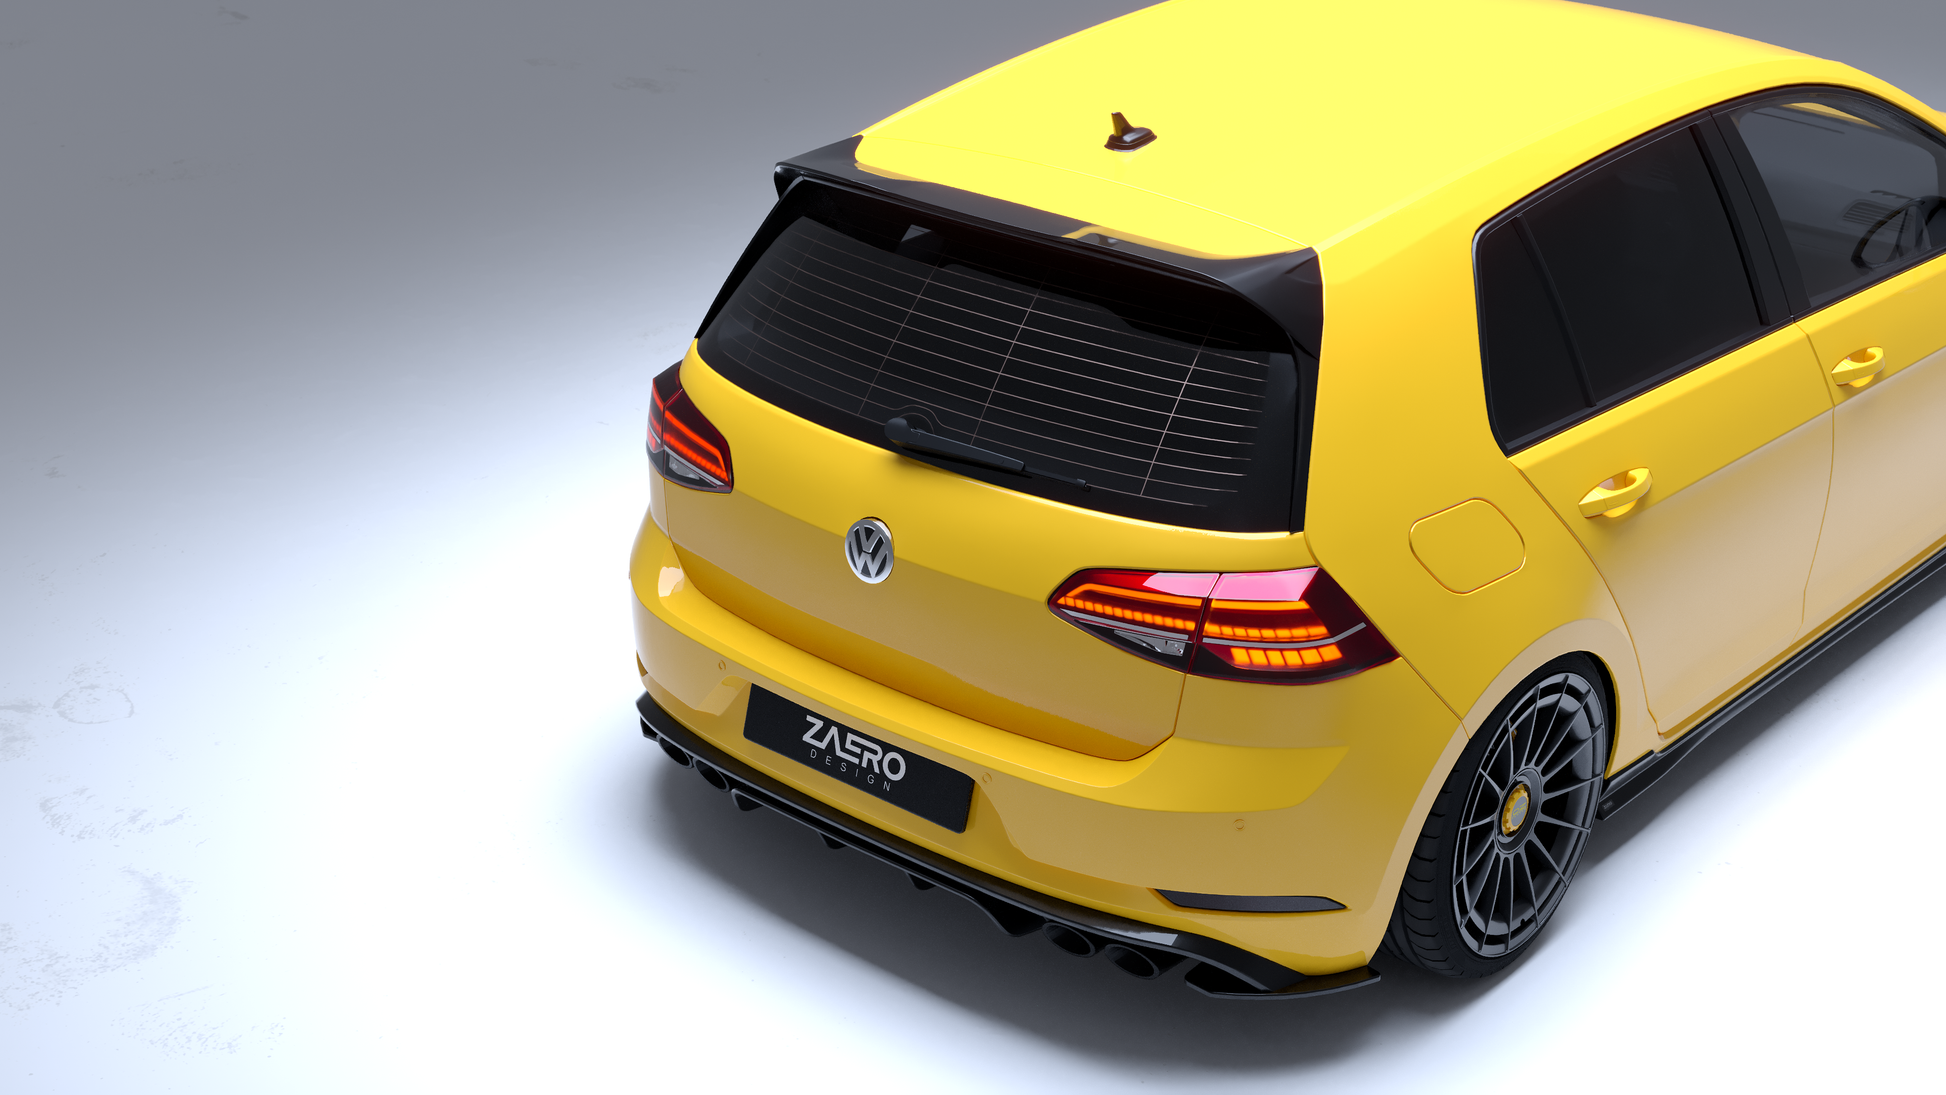 Rear spoiler VW Golf 7/7.5 - Zaero Design – Rijdersauto